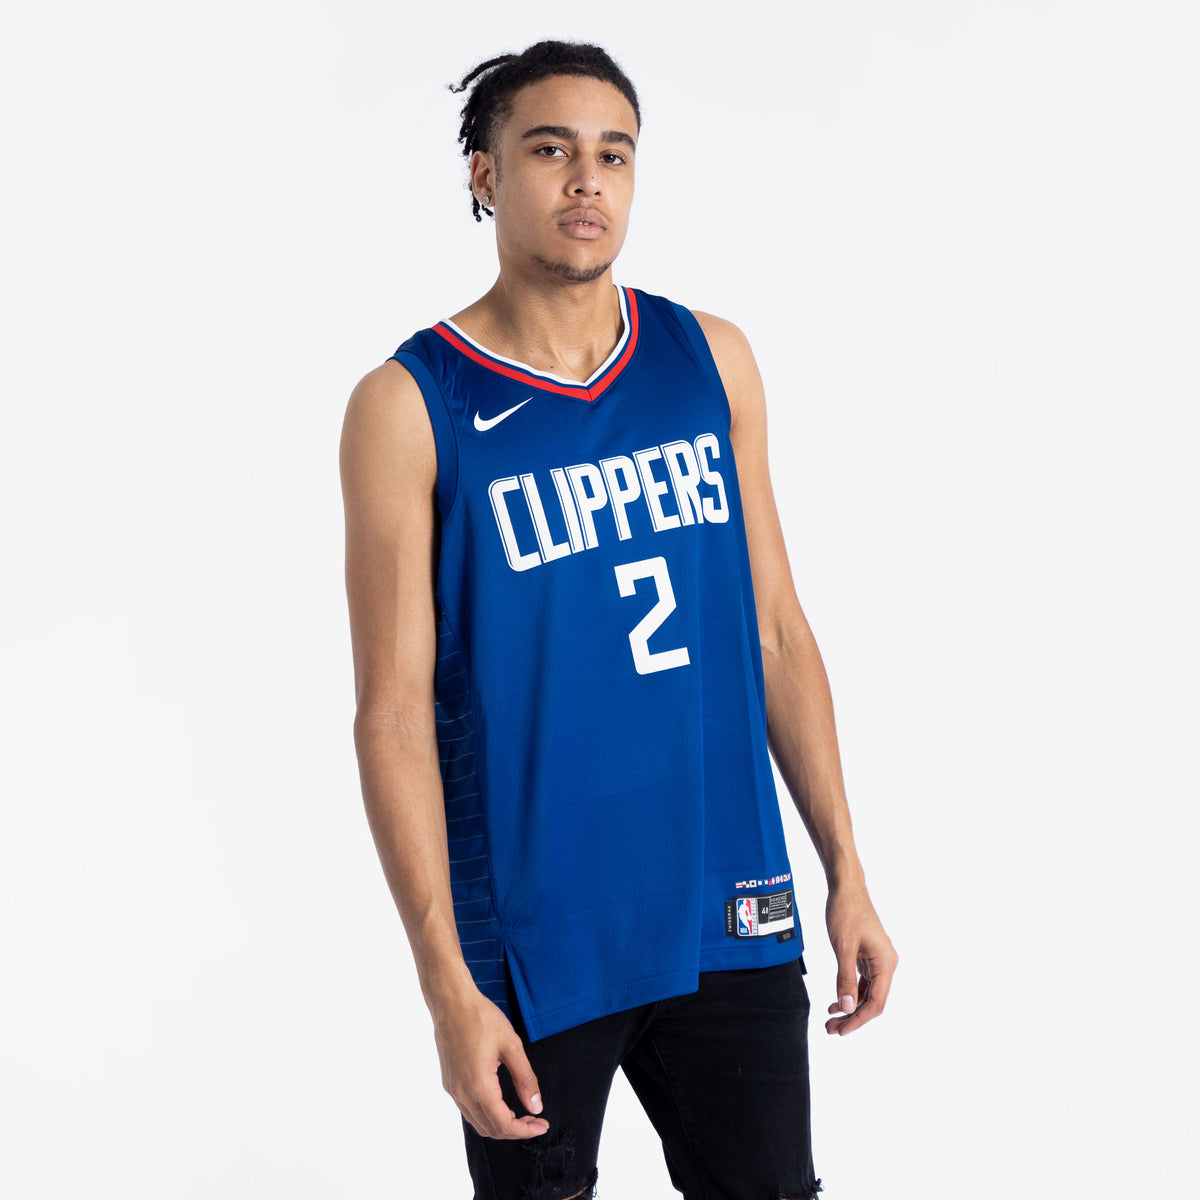 Adidas Los Angeles Clippers *Vicky* NBA Nike Shirt M M